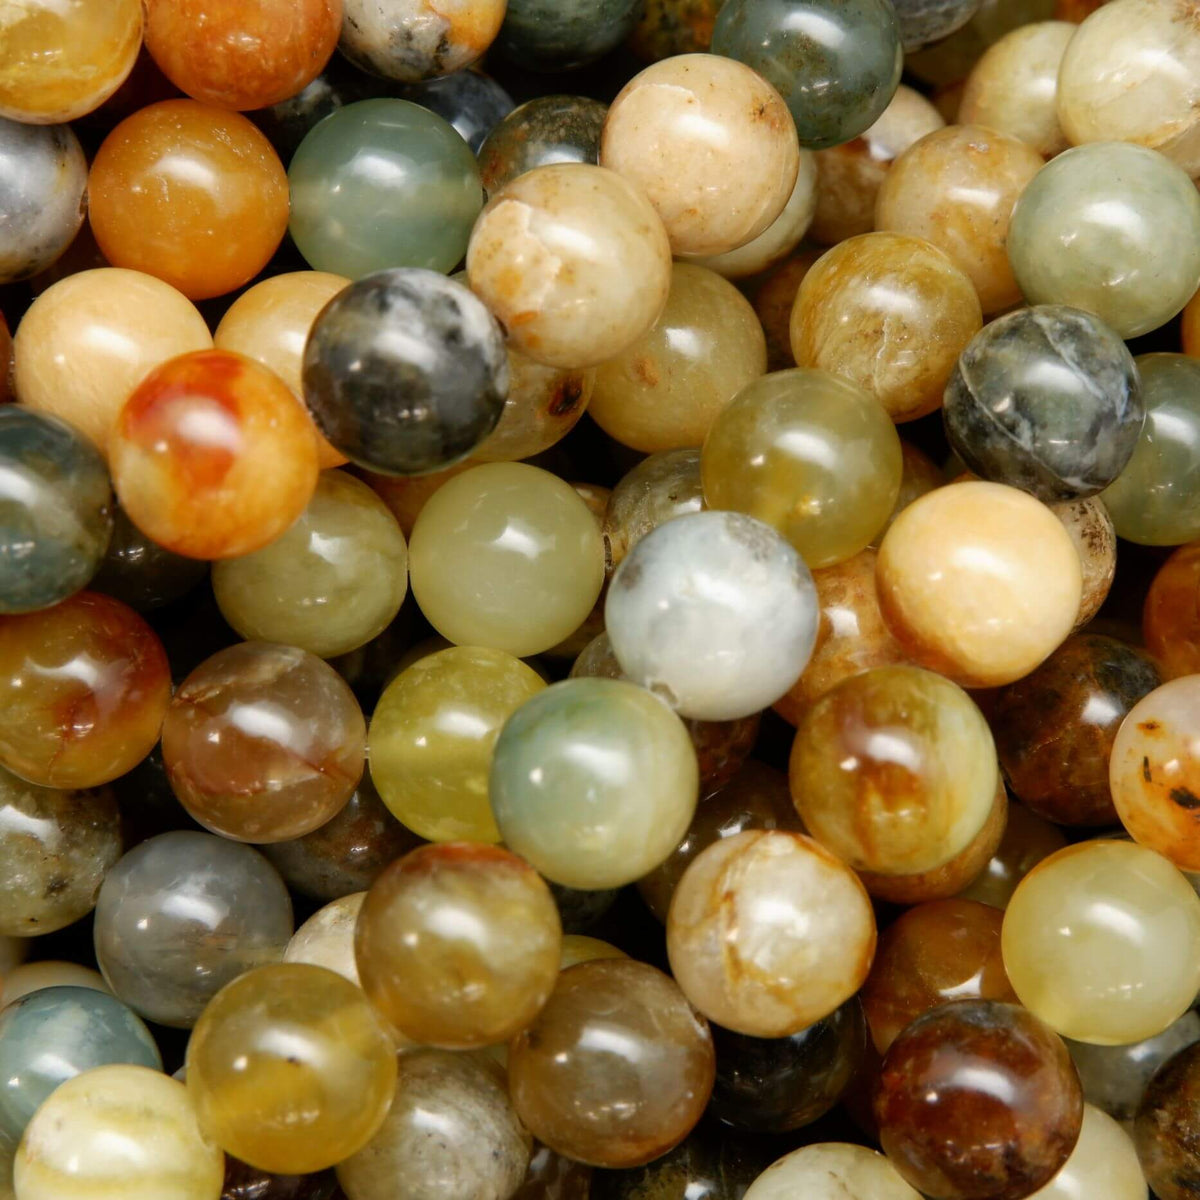 6mm Smooth Round Jade Gemstone Beads Colorful Jade Beads Natural Gemstone  Beads for Jewelry Making 